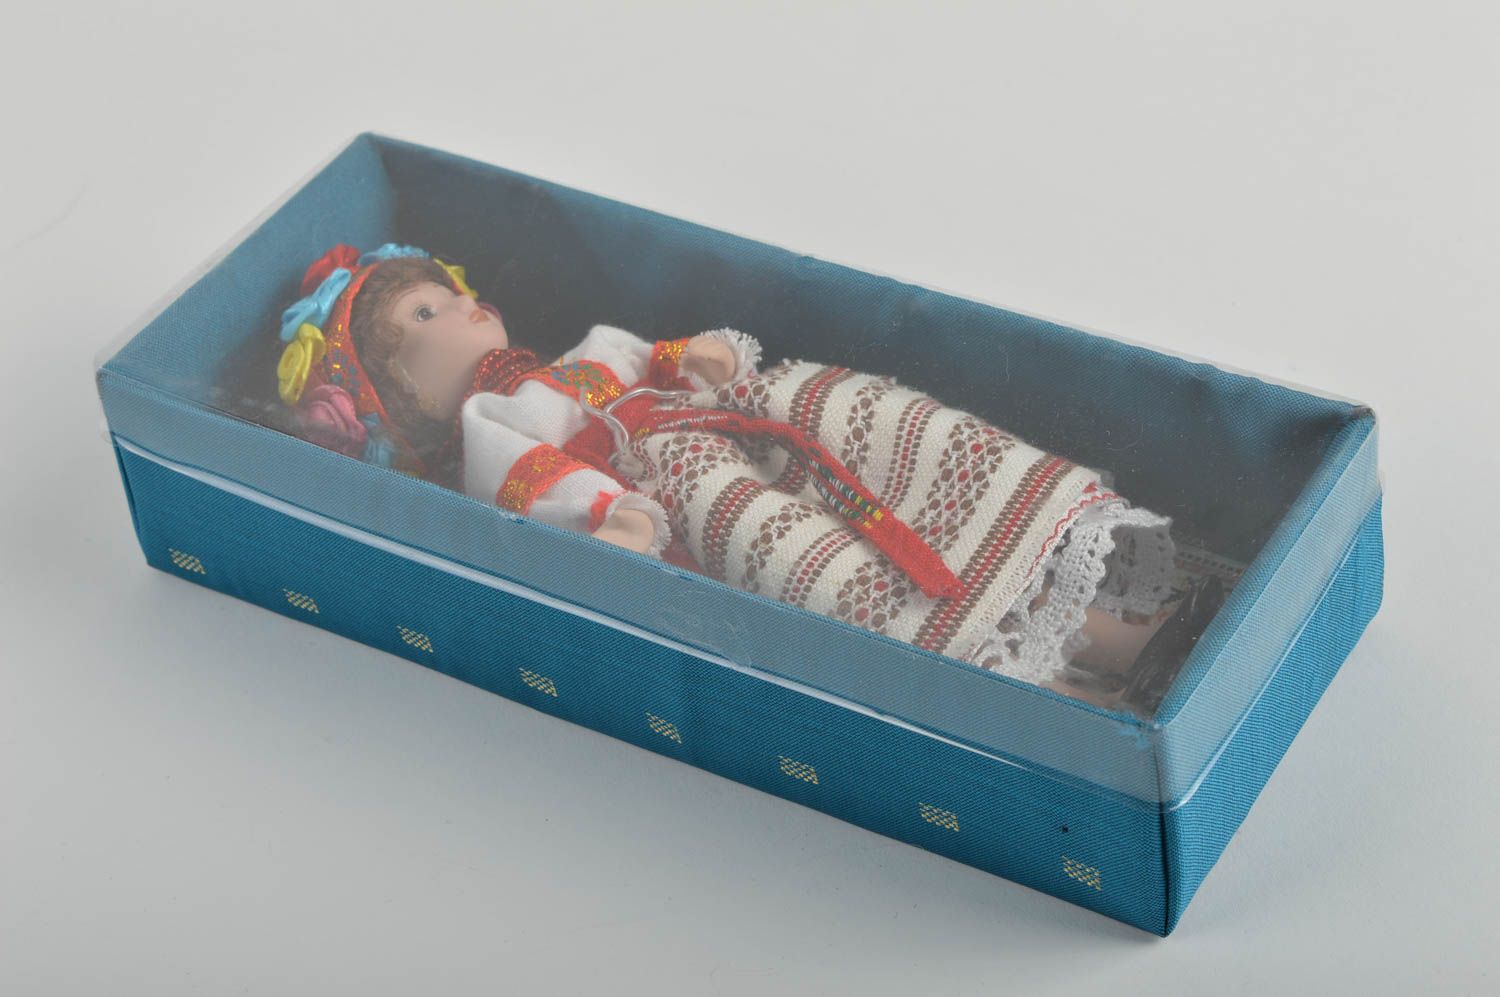 Collectible dolls folk dolls toys for children nursery decor home decor photo 5